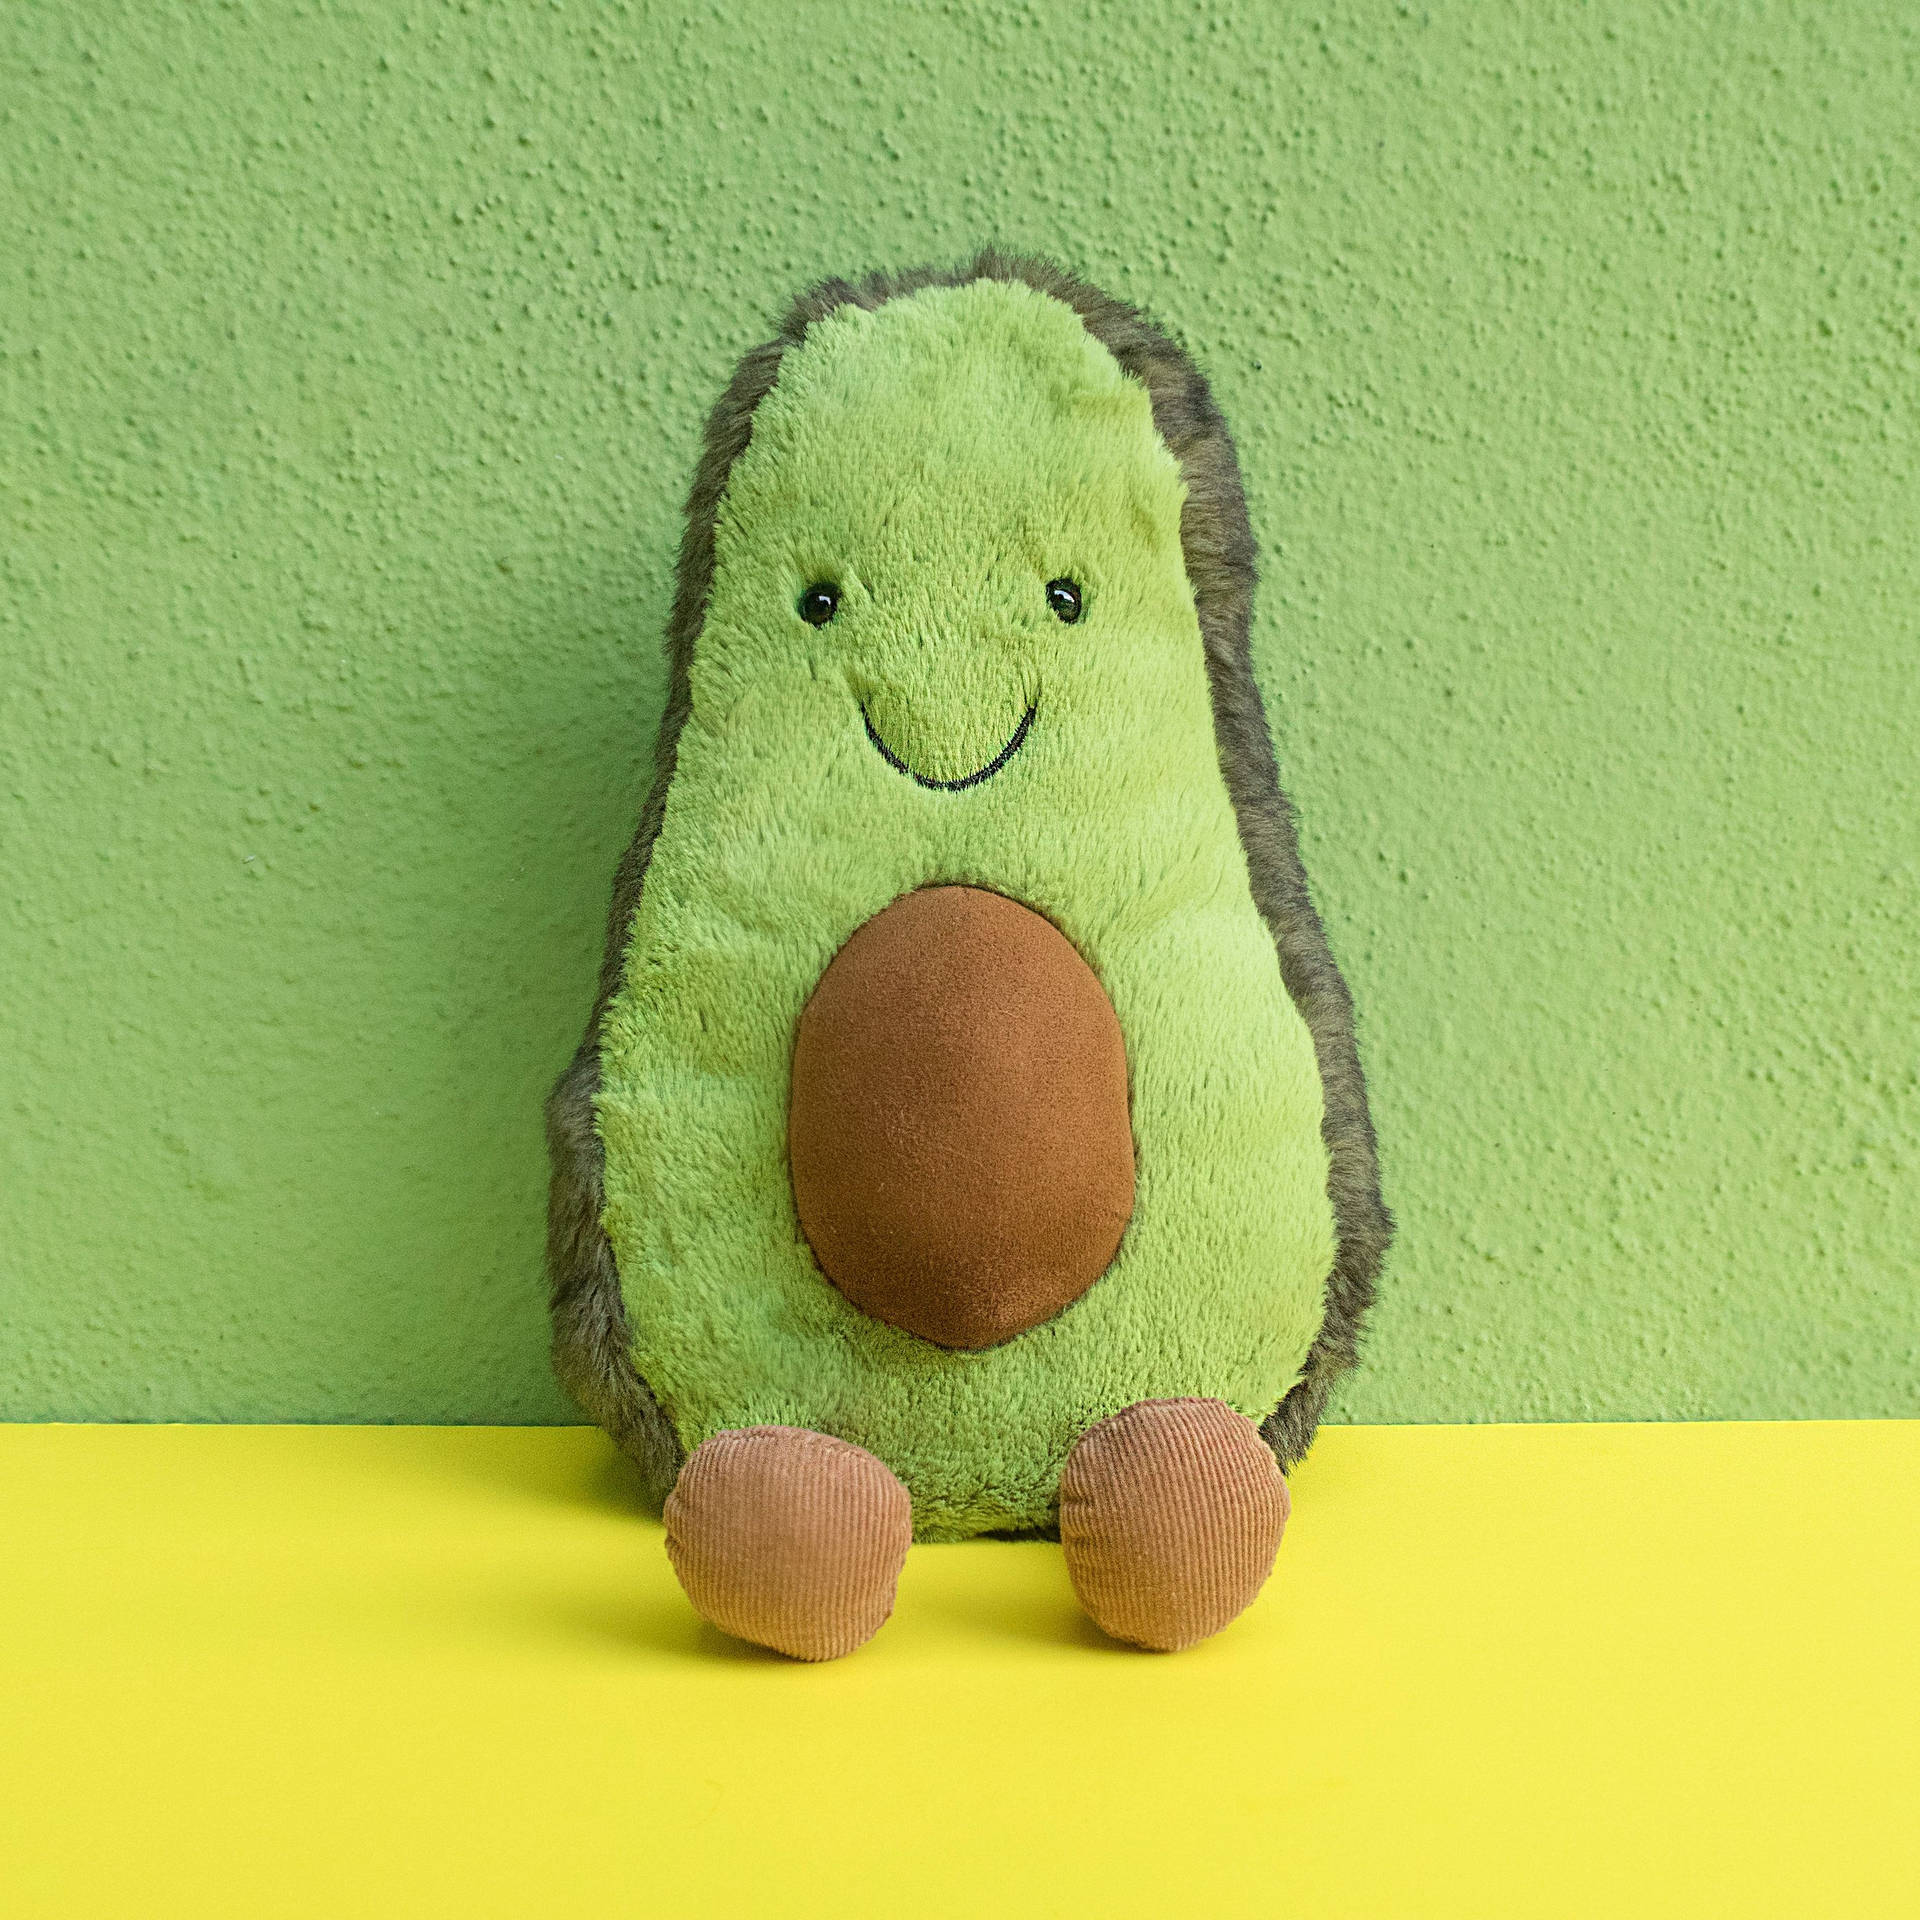 Ipad Pro Cute Avocado Toy Picture